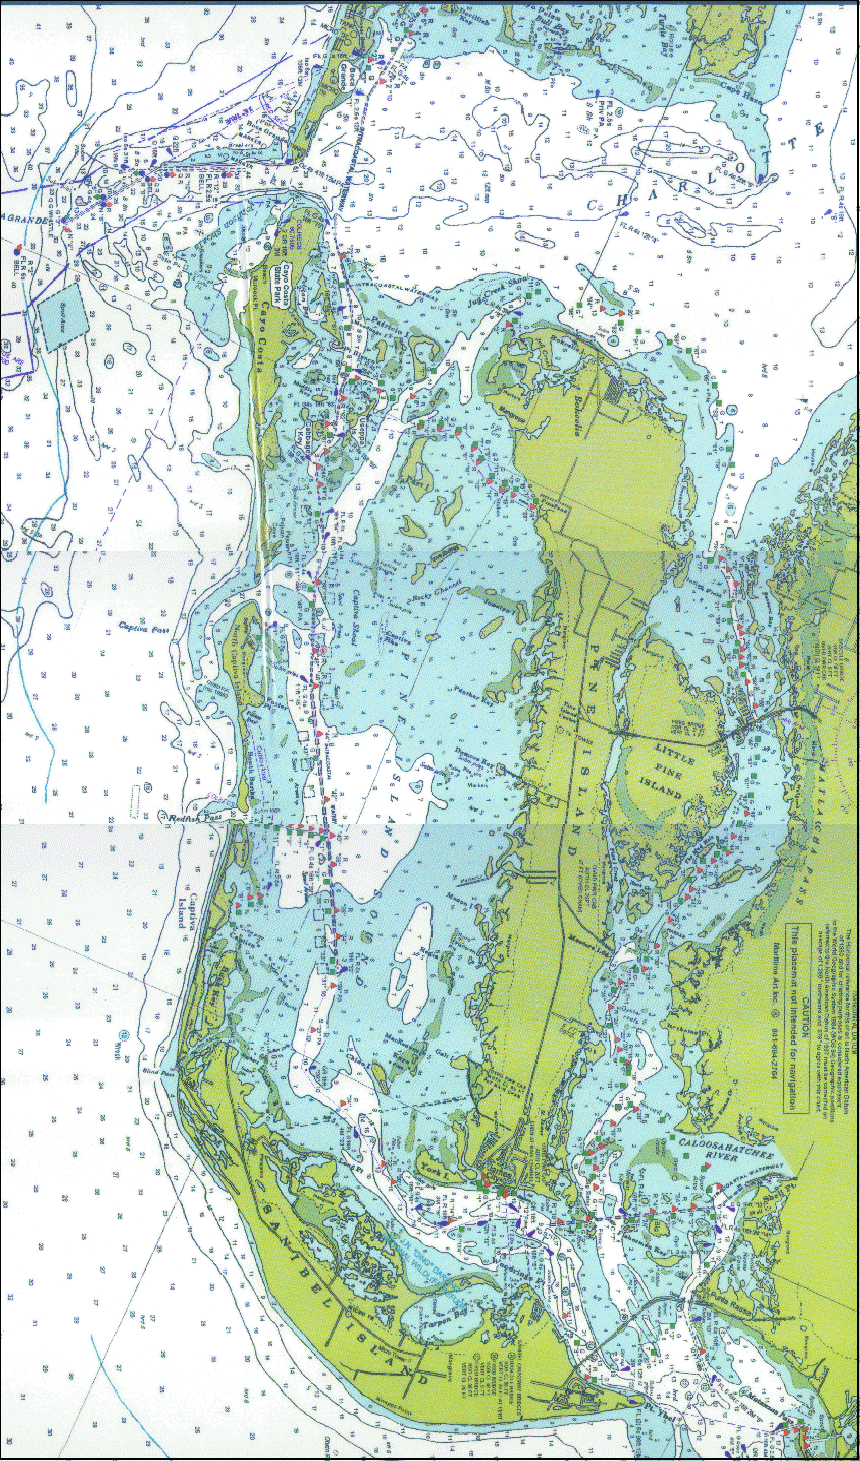 Cape Coral Navigation Charts